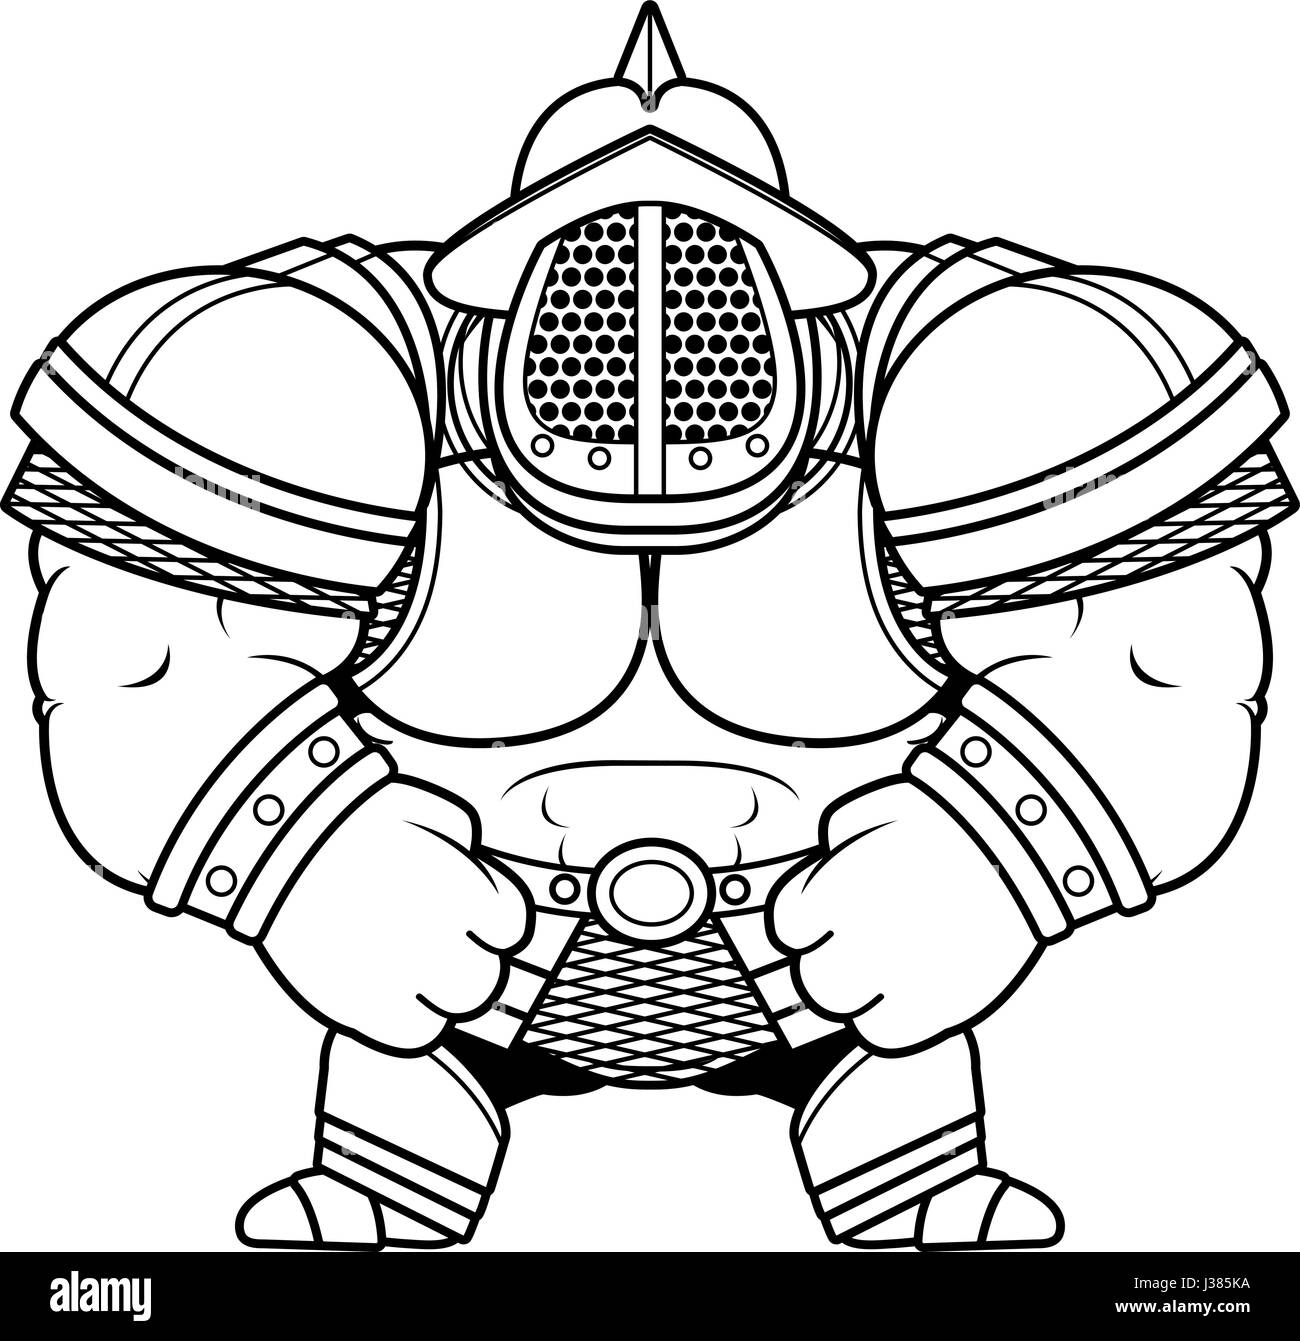 A cartoon illustration of a muscular gladiator in armor. Stock Vector